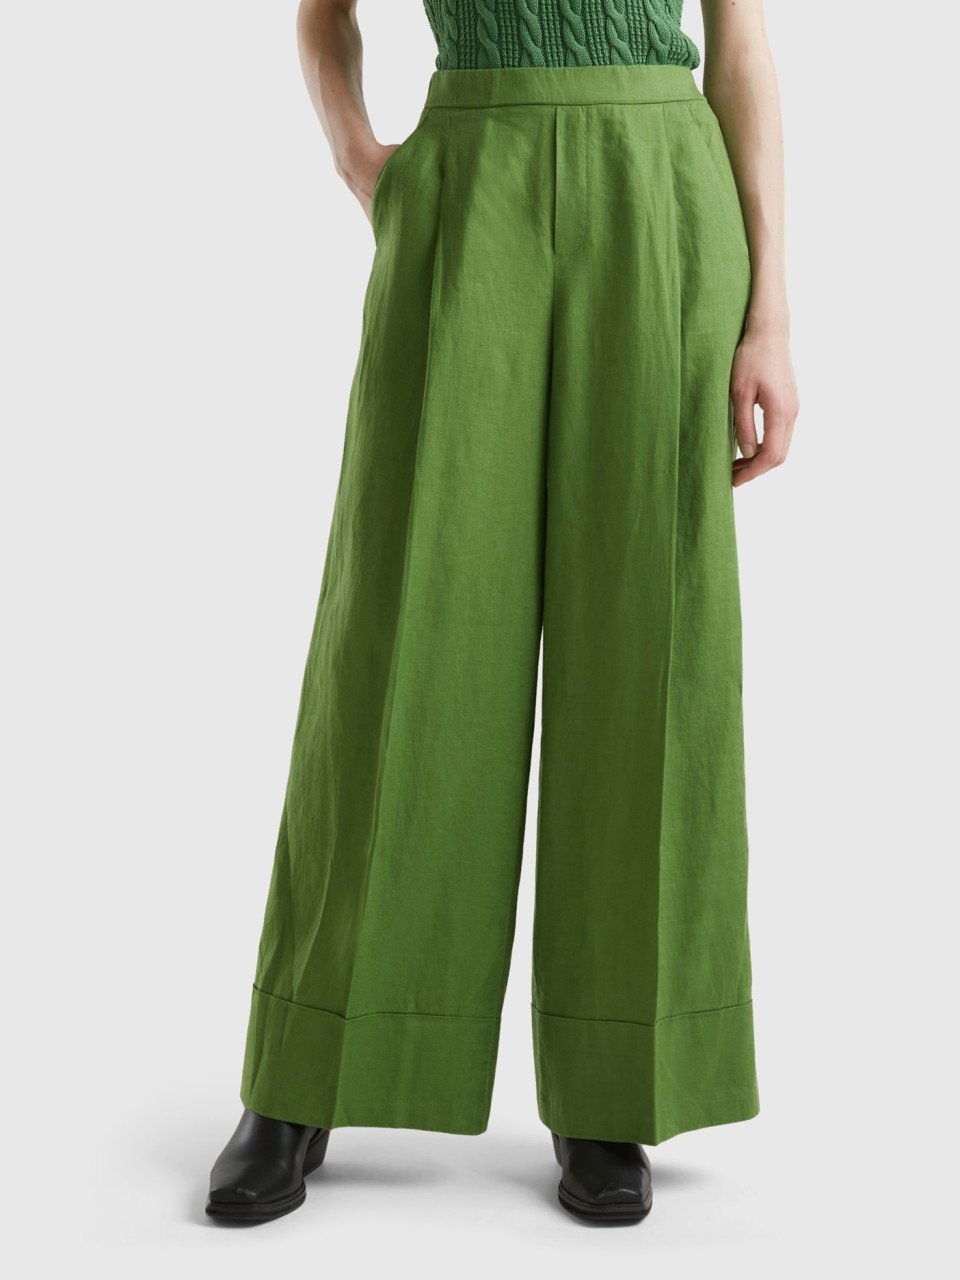 Benetton, Palazzo Trousers In 100% Linen, Military Green, Women